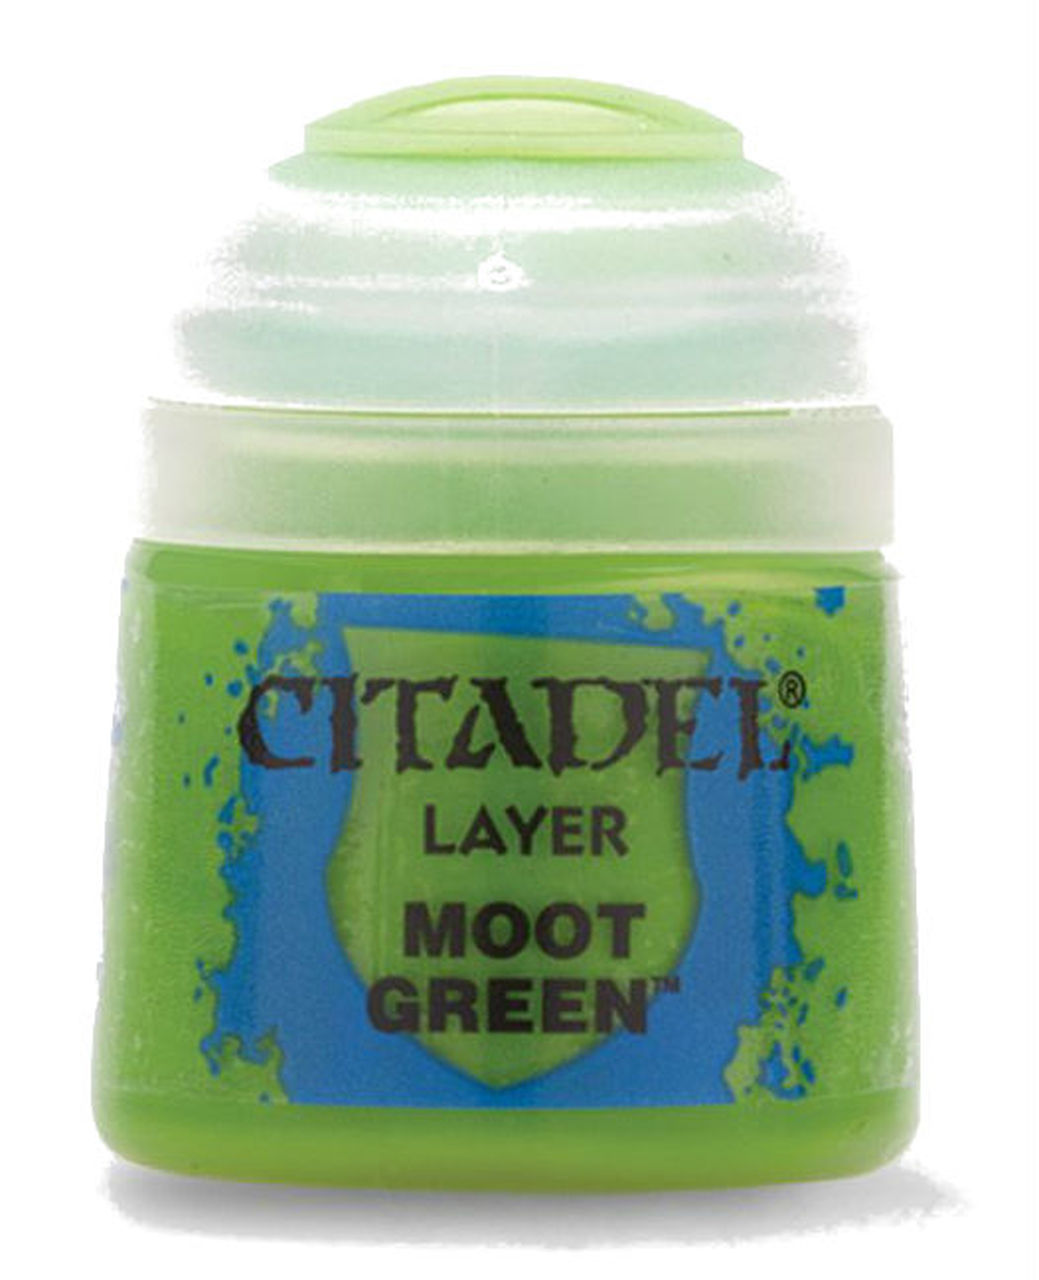 Citadel Paint: Layer - Moot Green